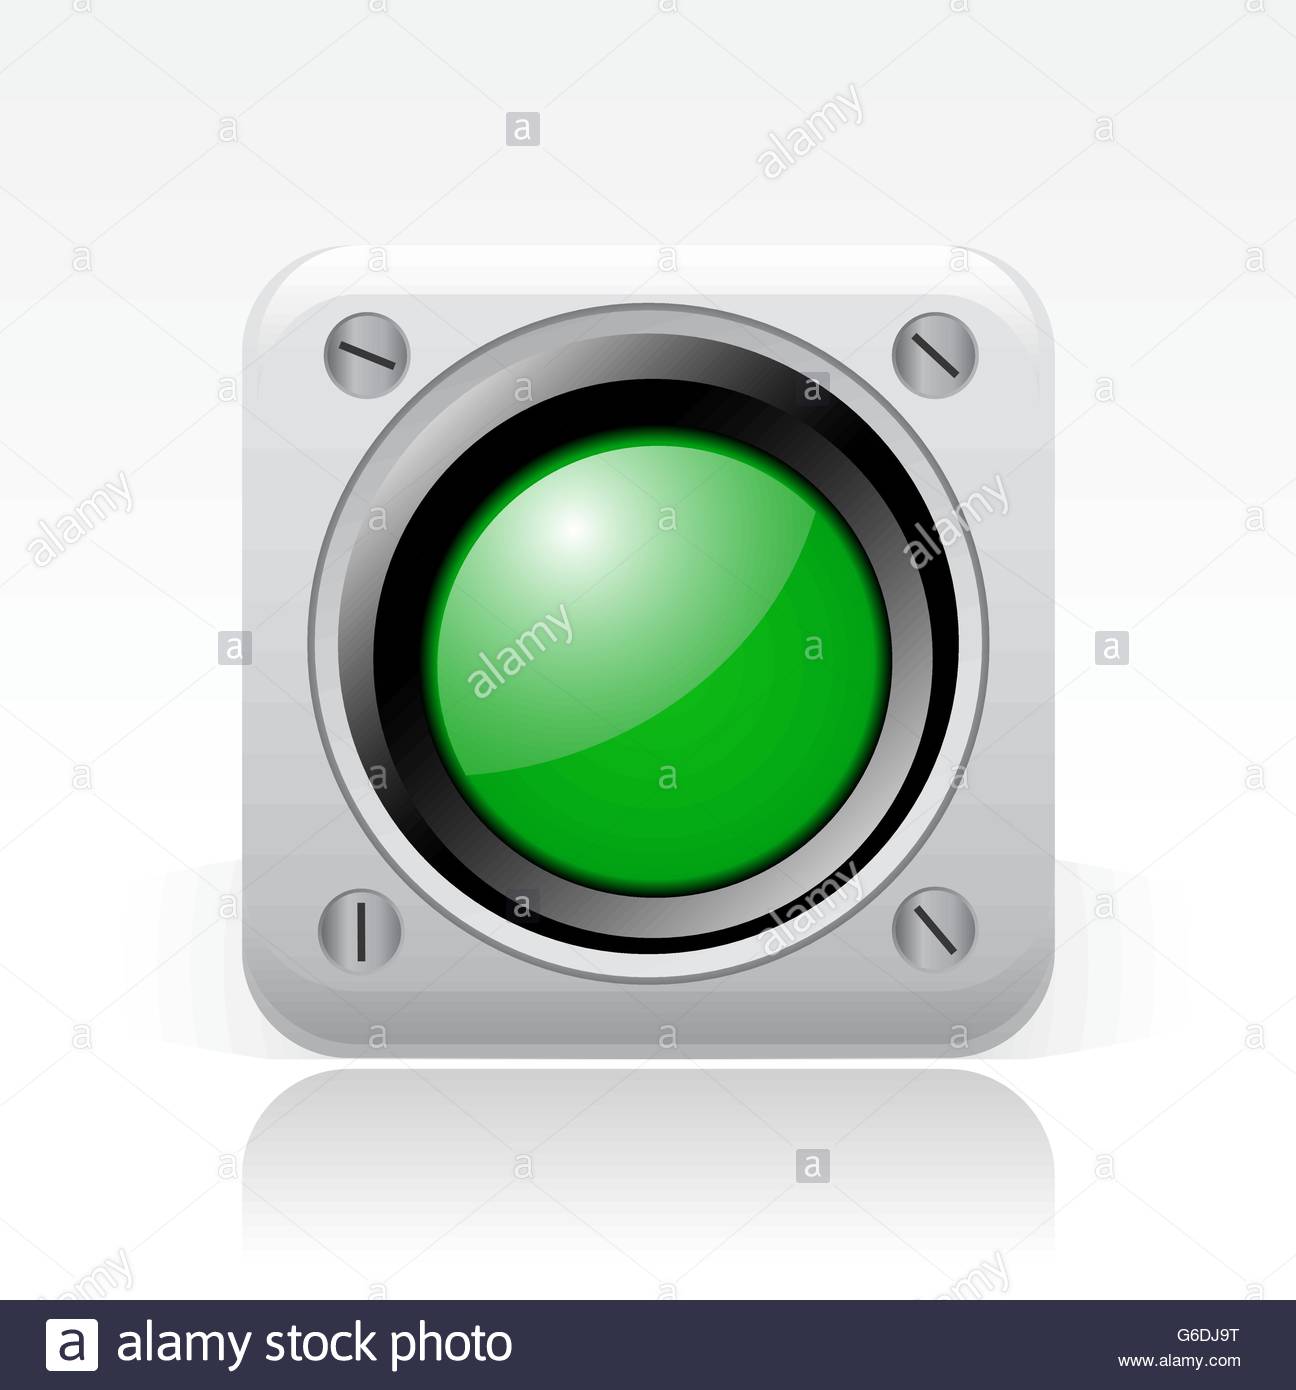 Go, green, green light, light, traffic icon | Icon search engine